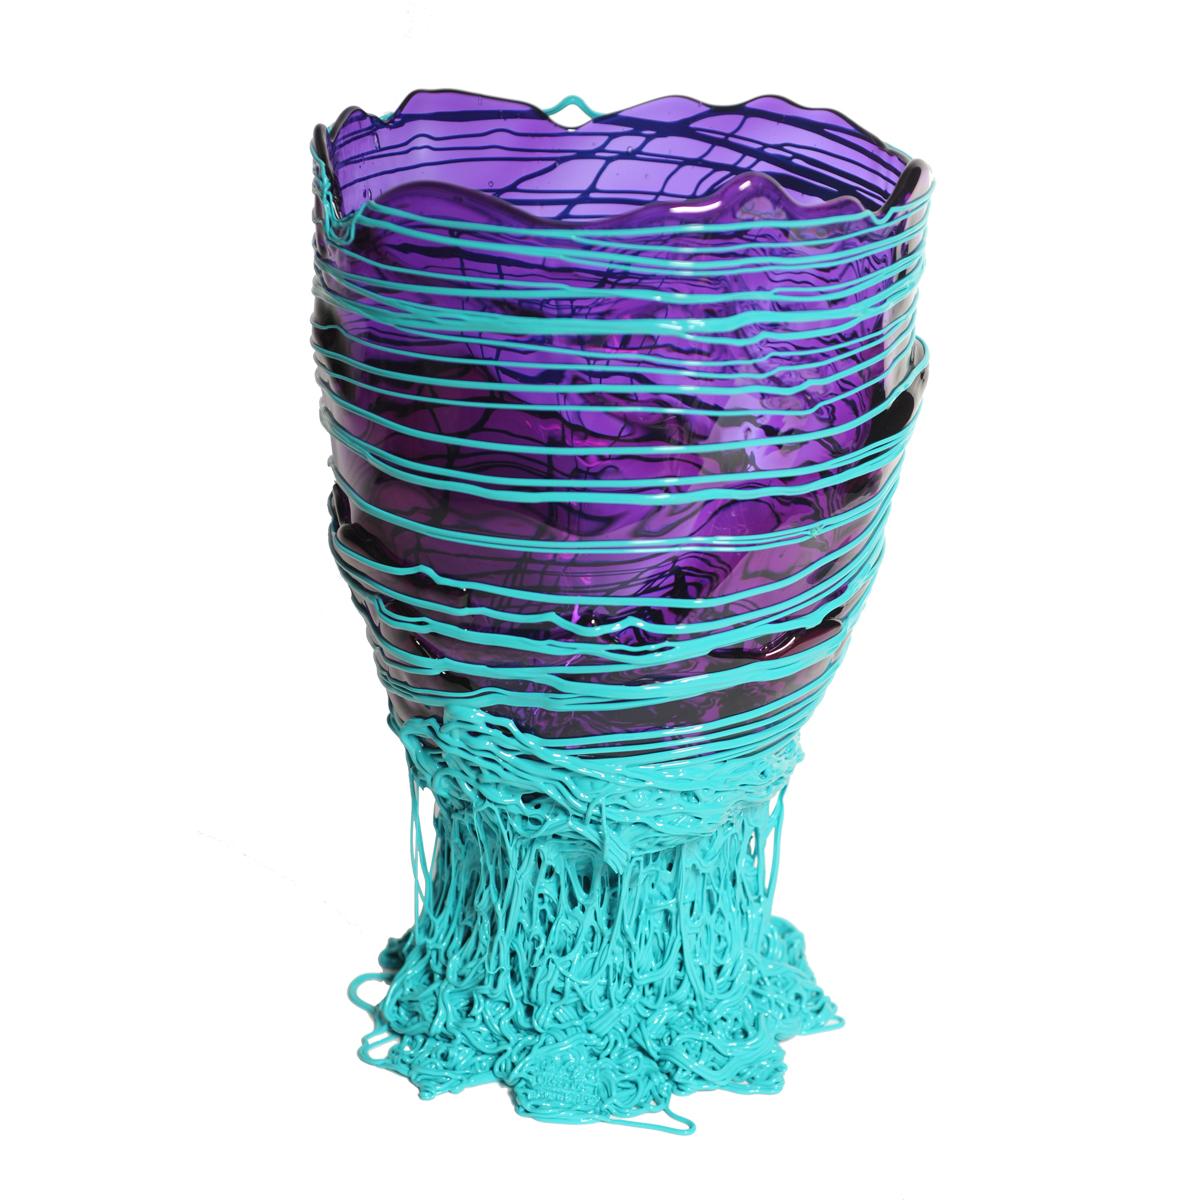 Contemporary Gaetano Pesce Spaghetti M Vase Soft Resin Purple, Turquoise In New Condition For Sale In barasso, IT